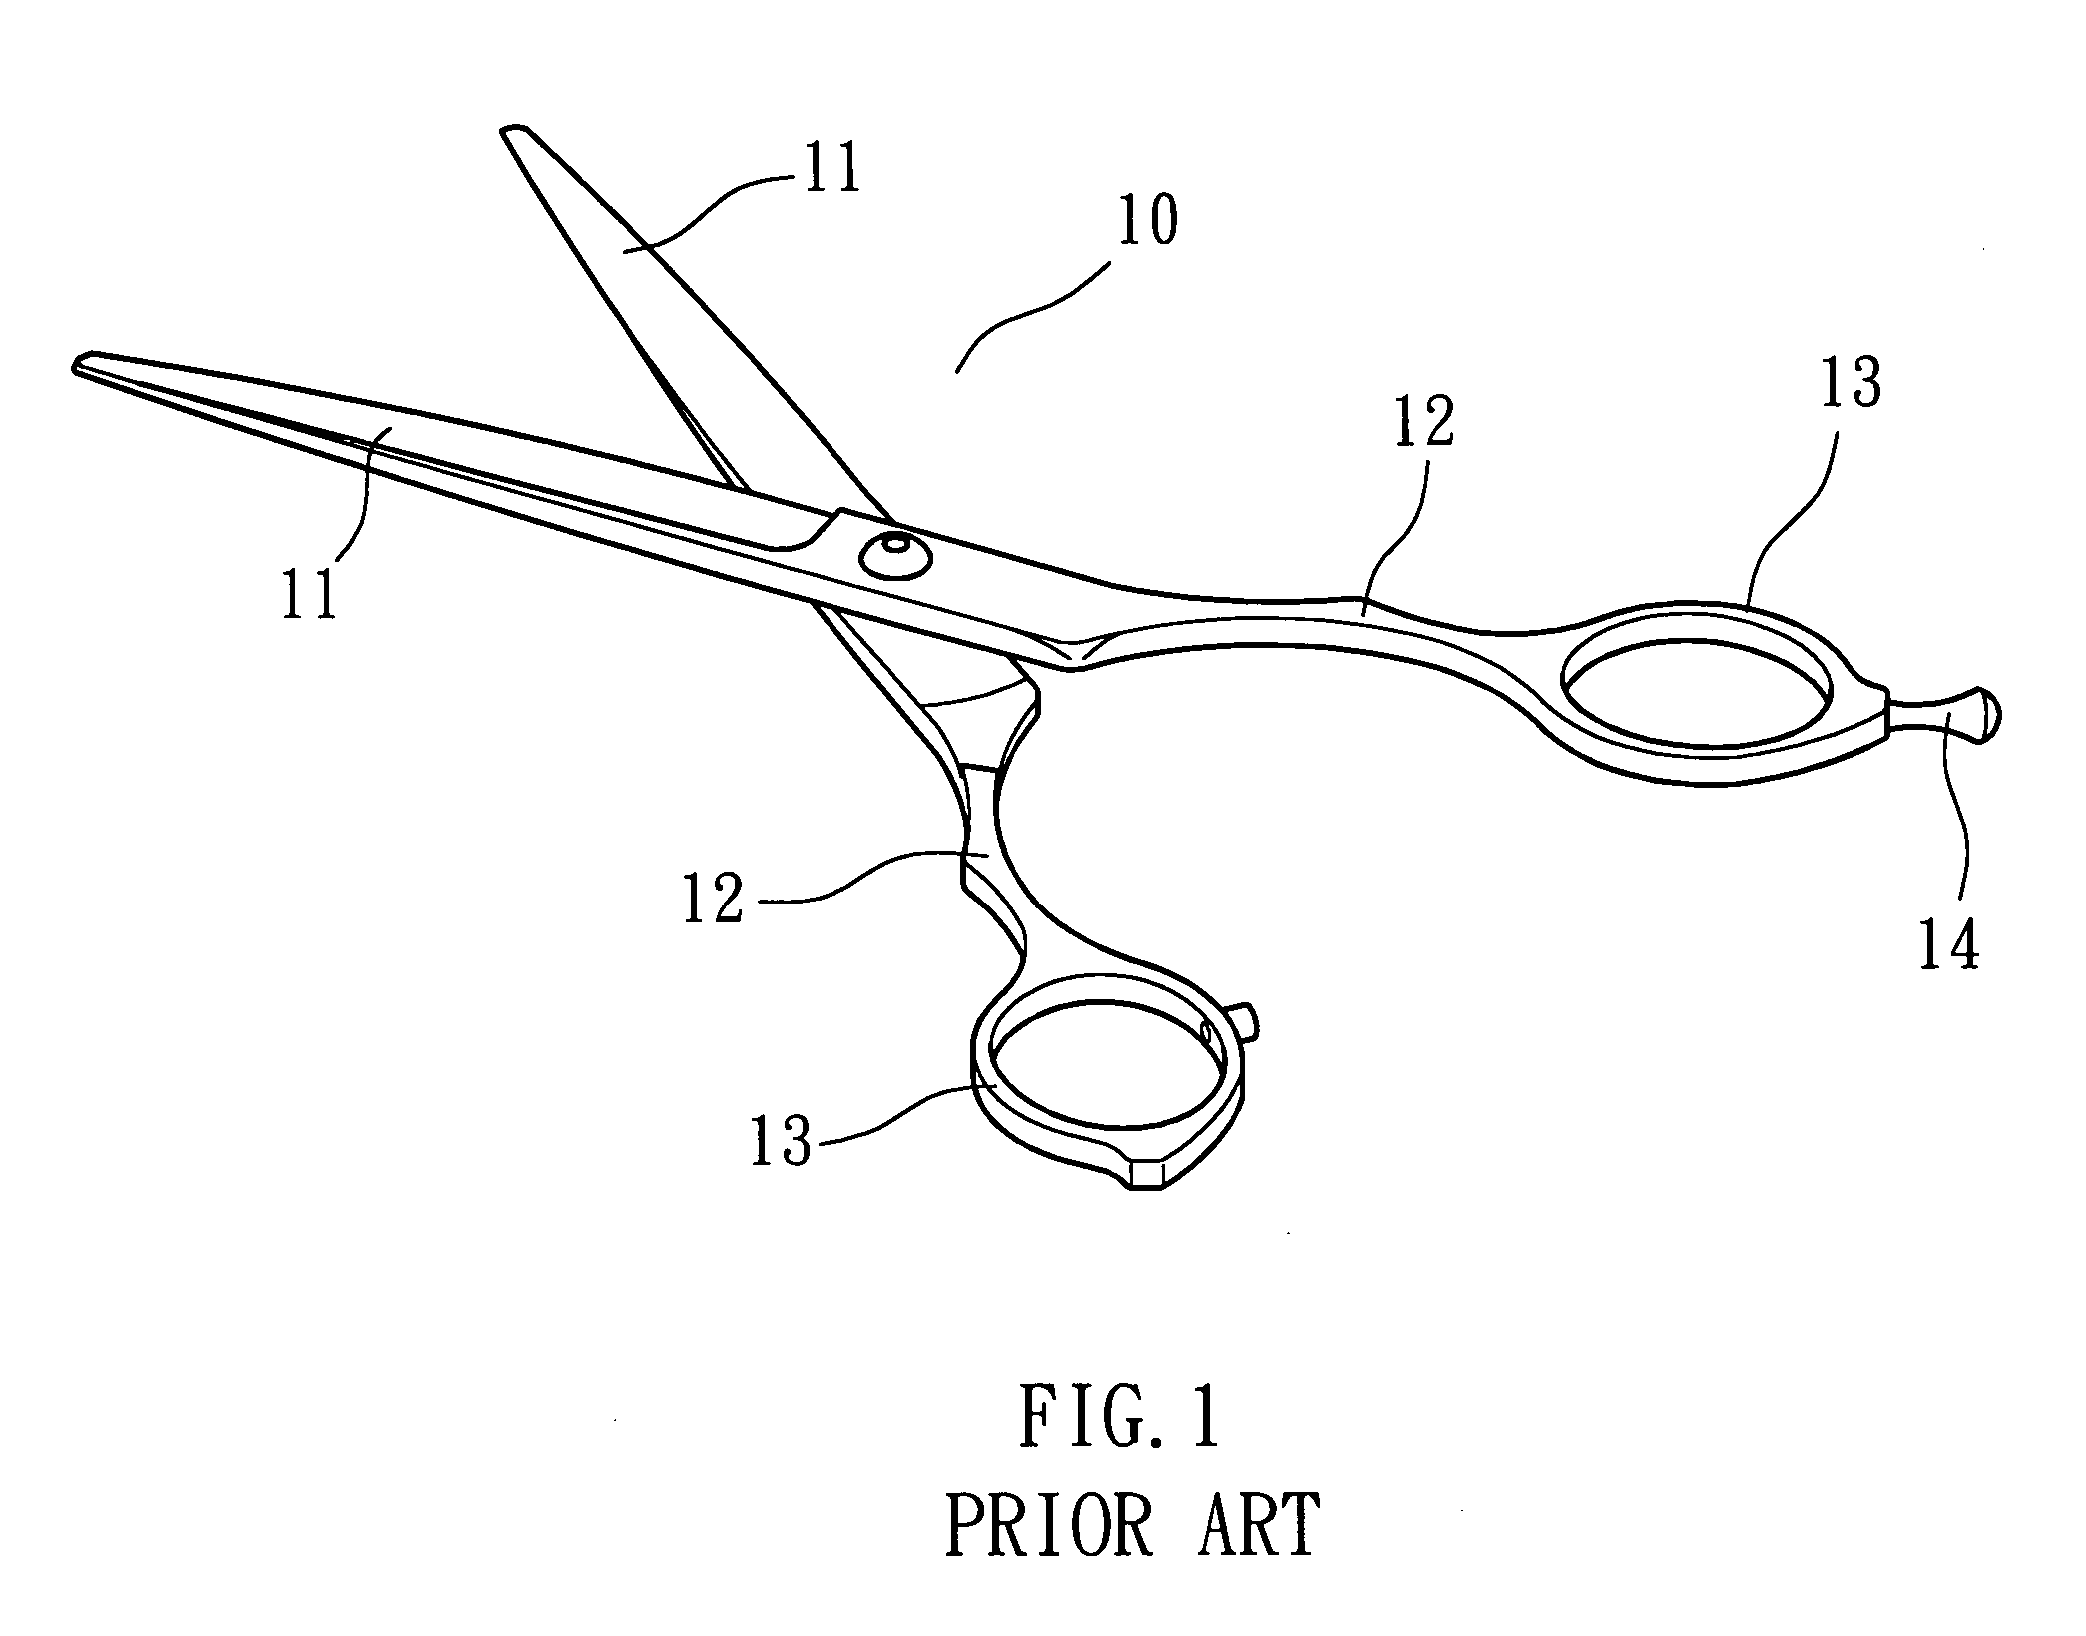 Handle structure of scissors